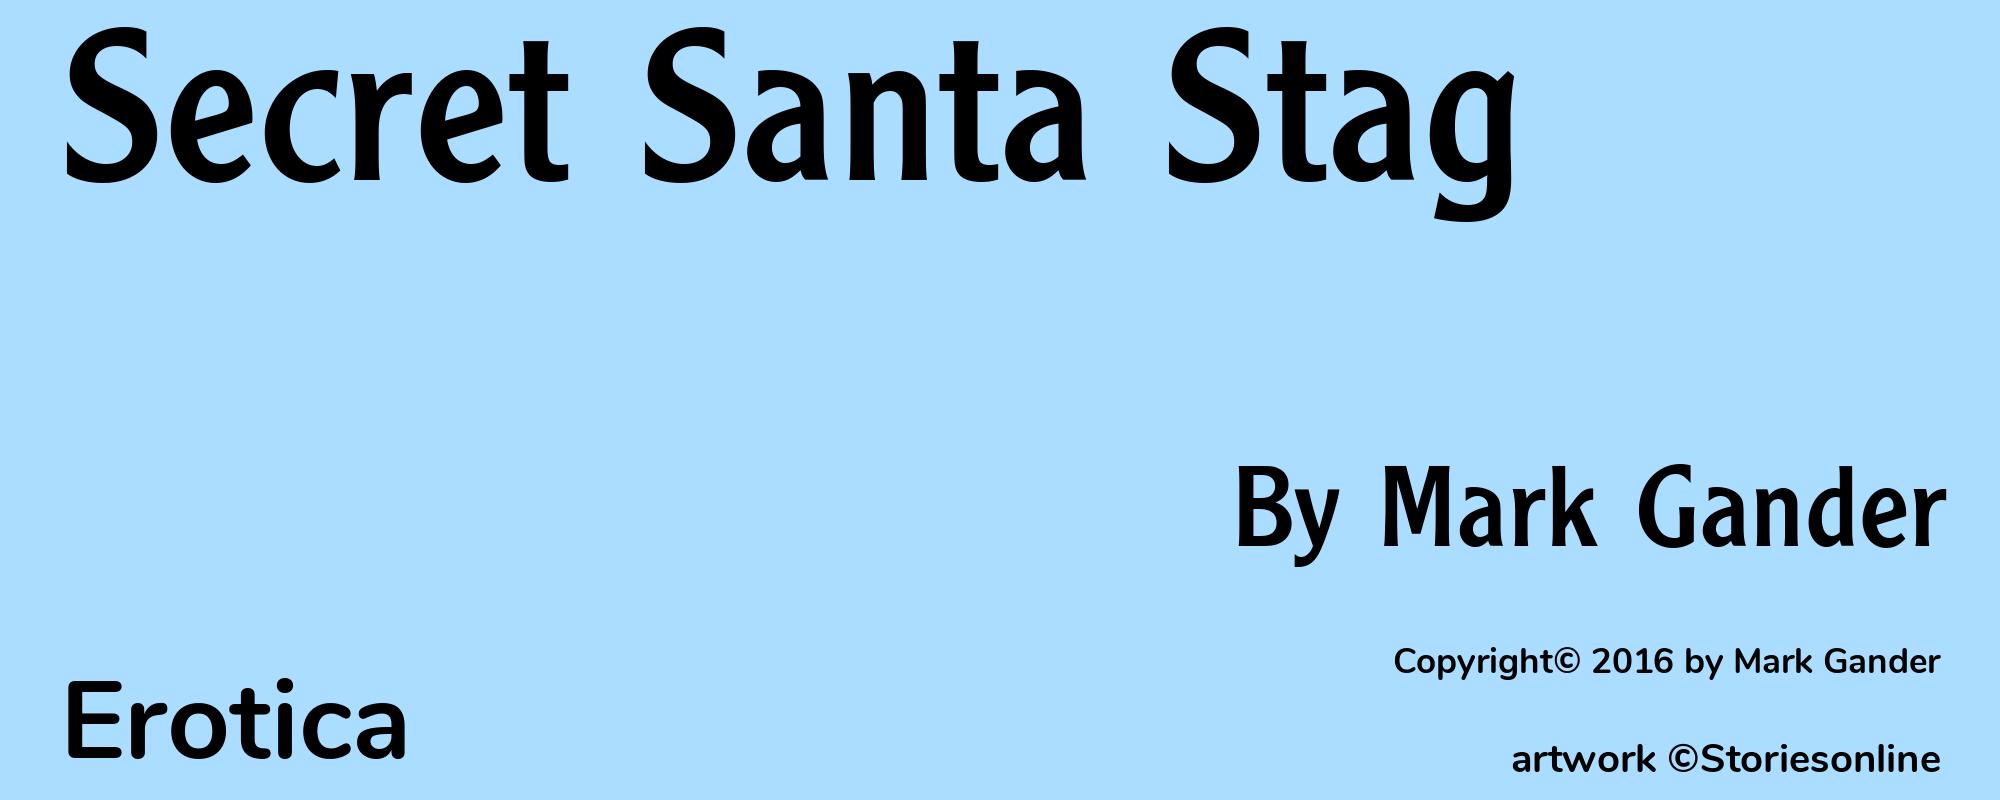 Secret Santa Stag - Cover